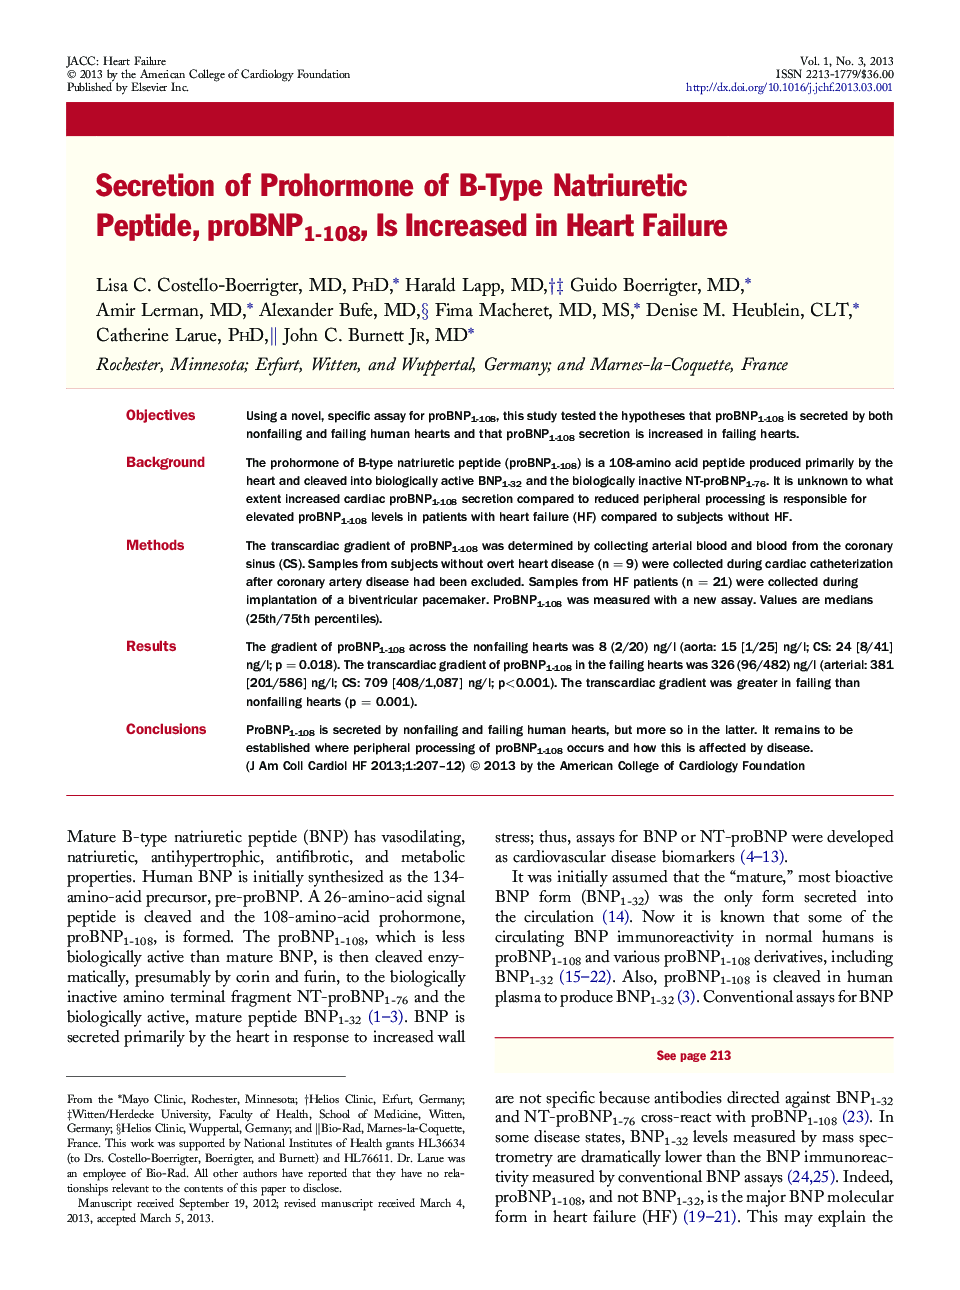 Secretion of Prohormone of B-Type Natriuretic Peptide, proBNP1-108, Is Increased in Heart Failure 